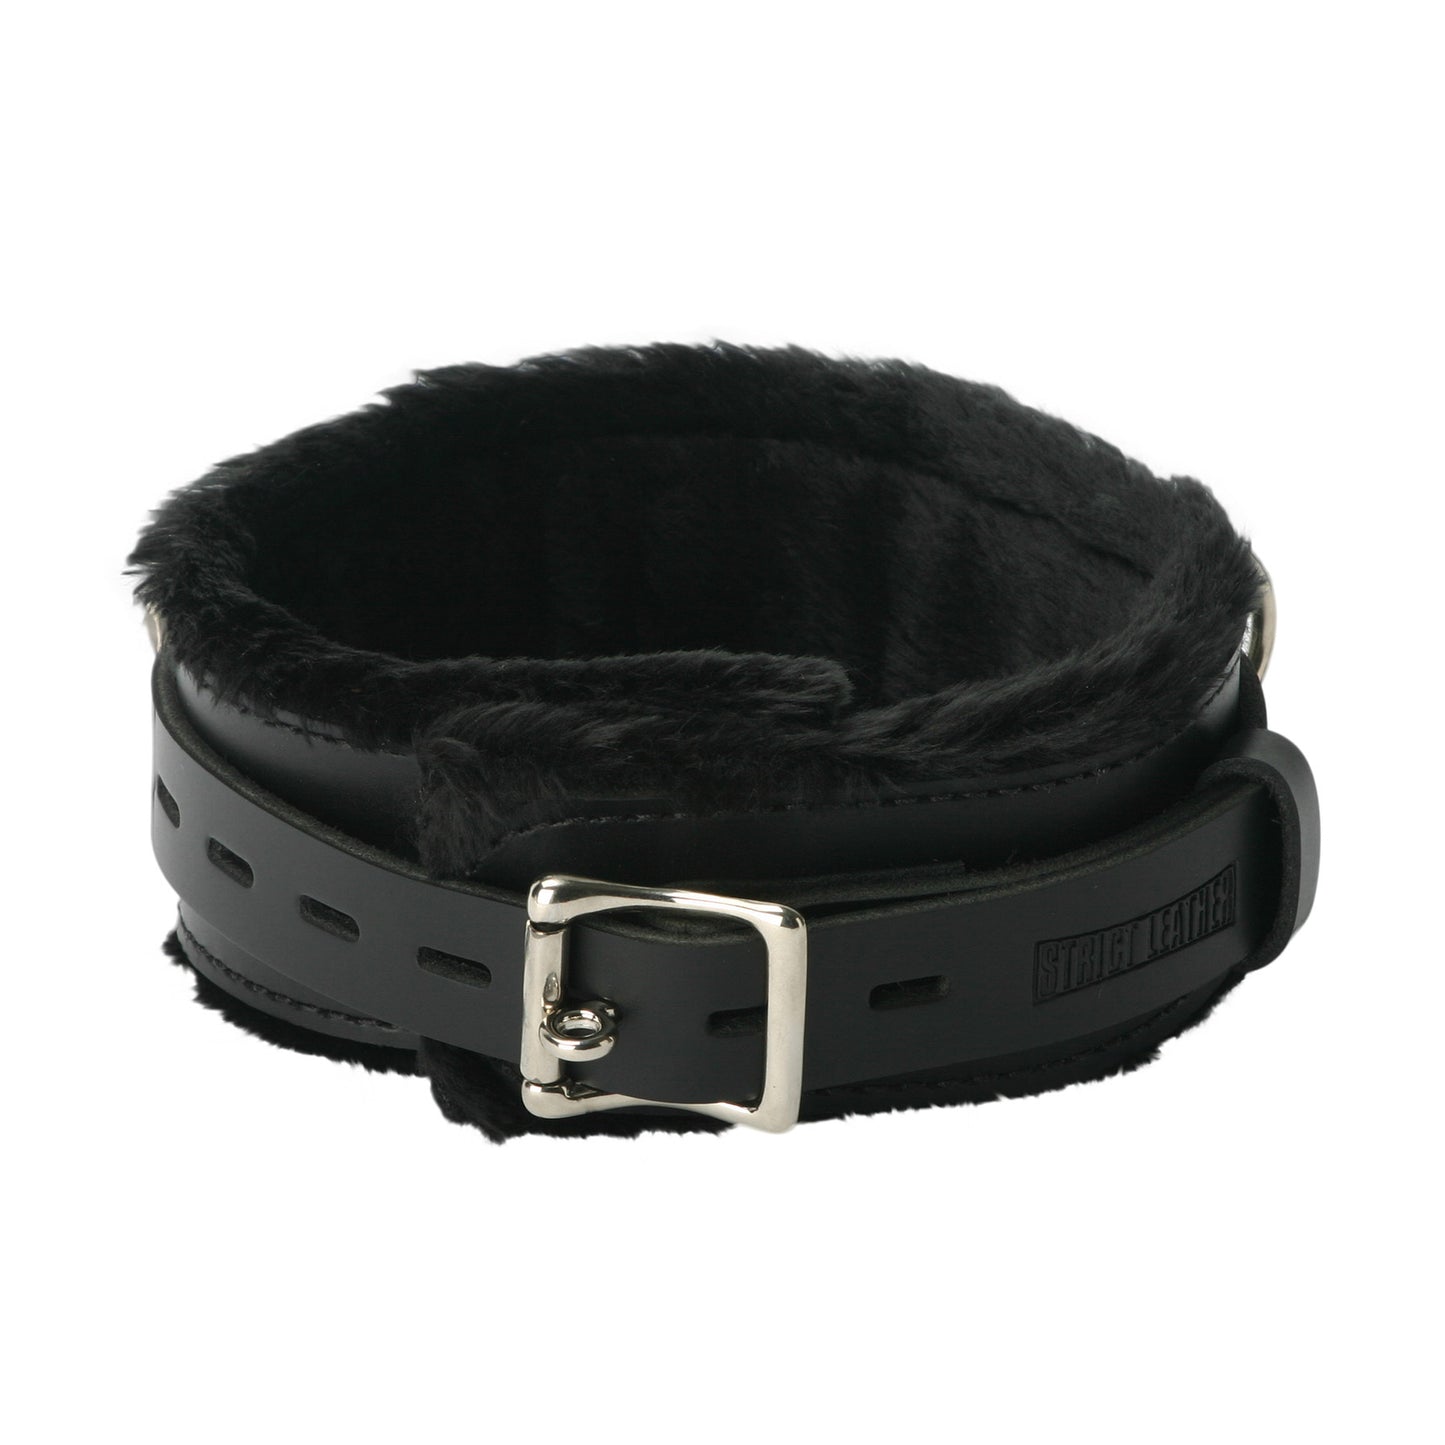 Strict Leather Premium Fur Lined Locking Collar- XL - UABDSM